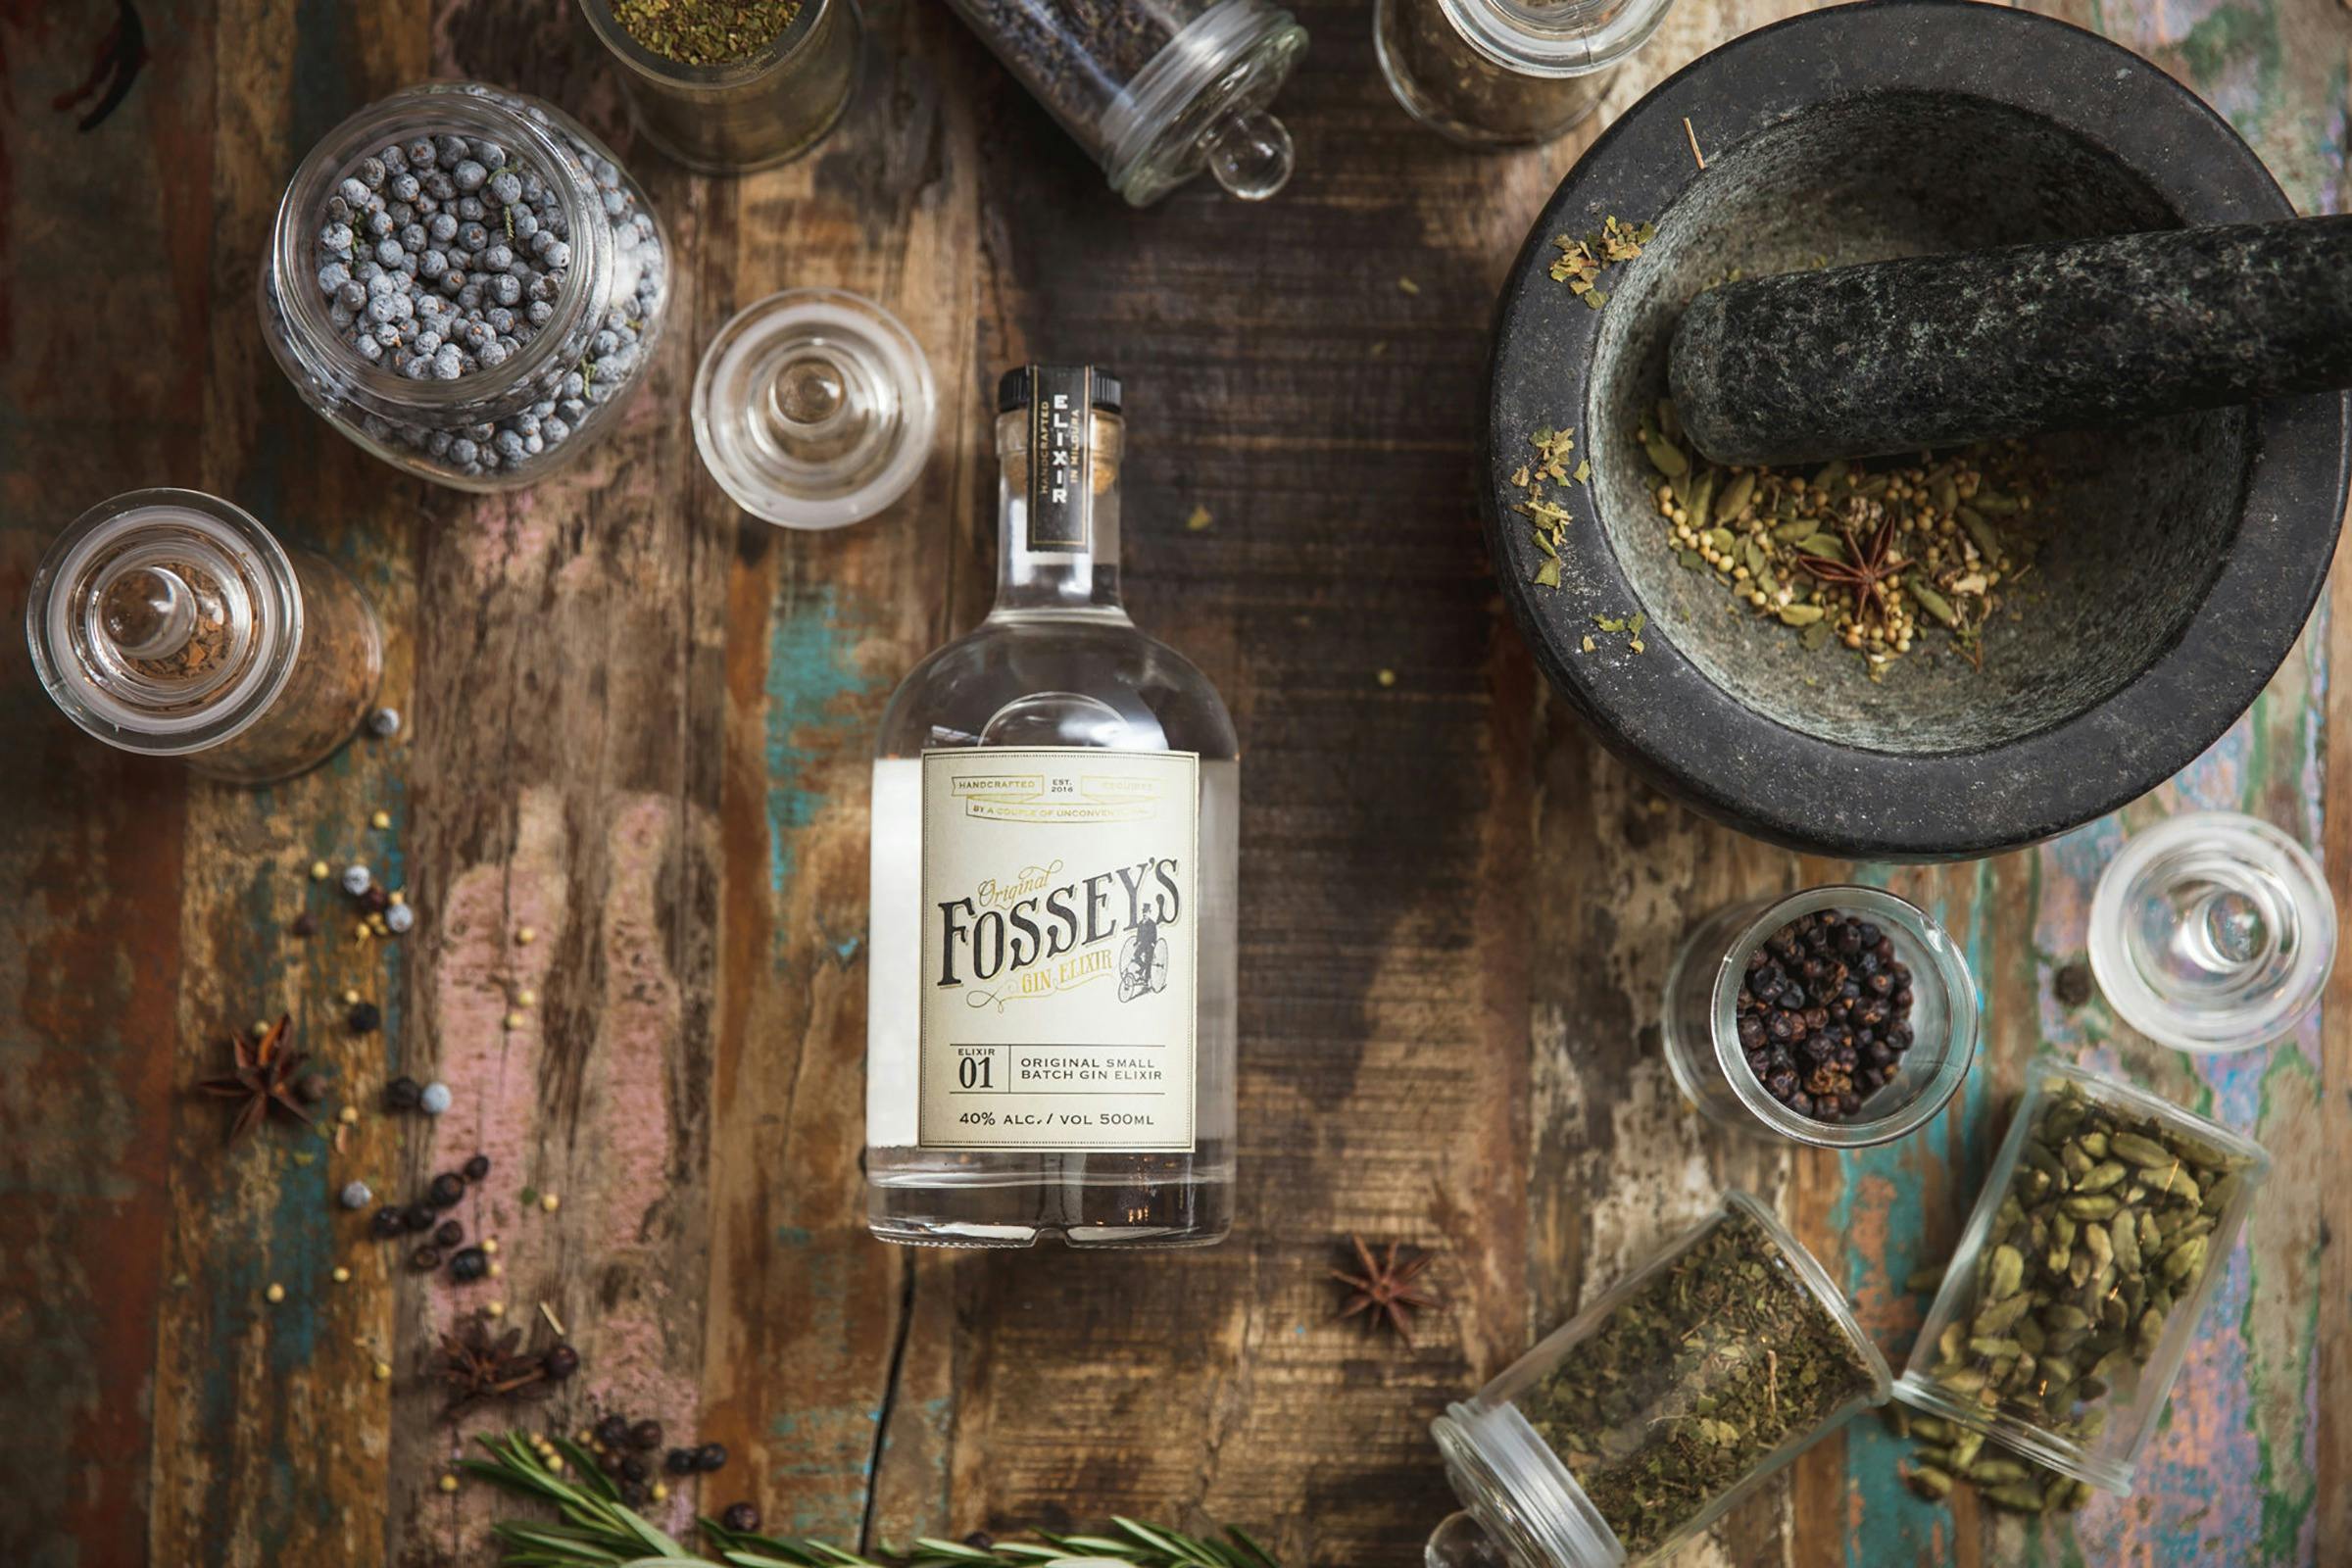 Fossey's Ginporium and Distillery